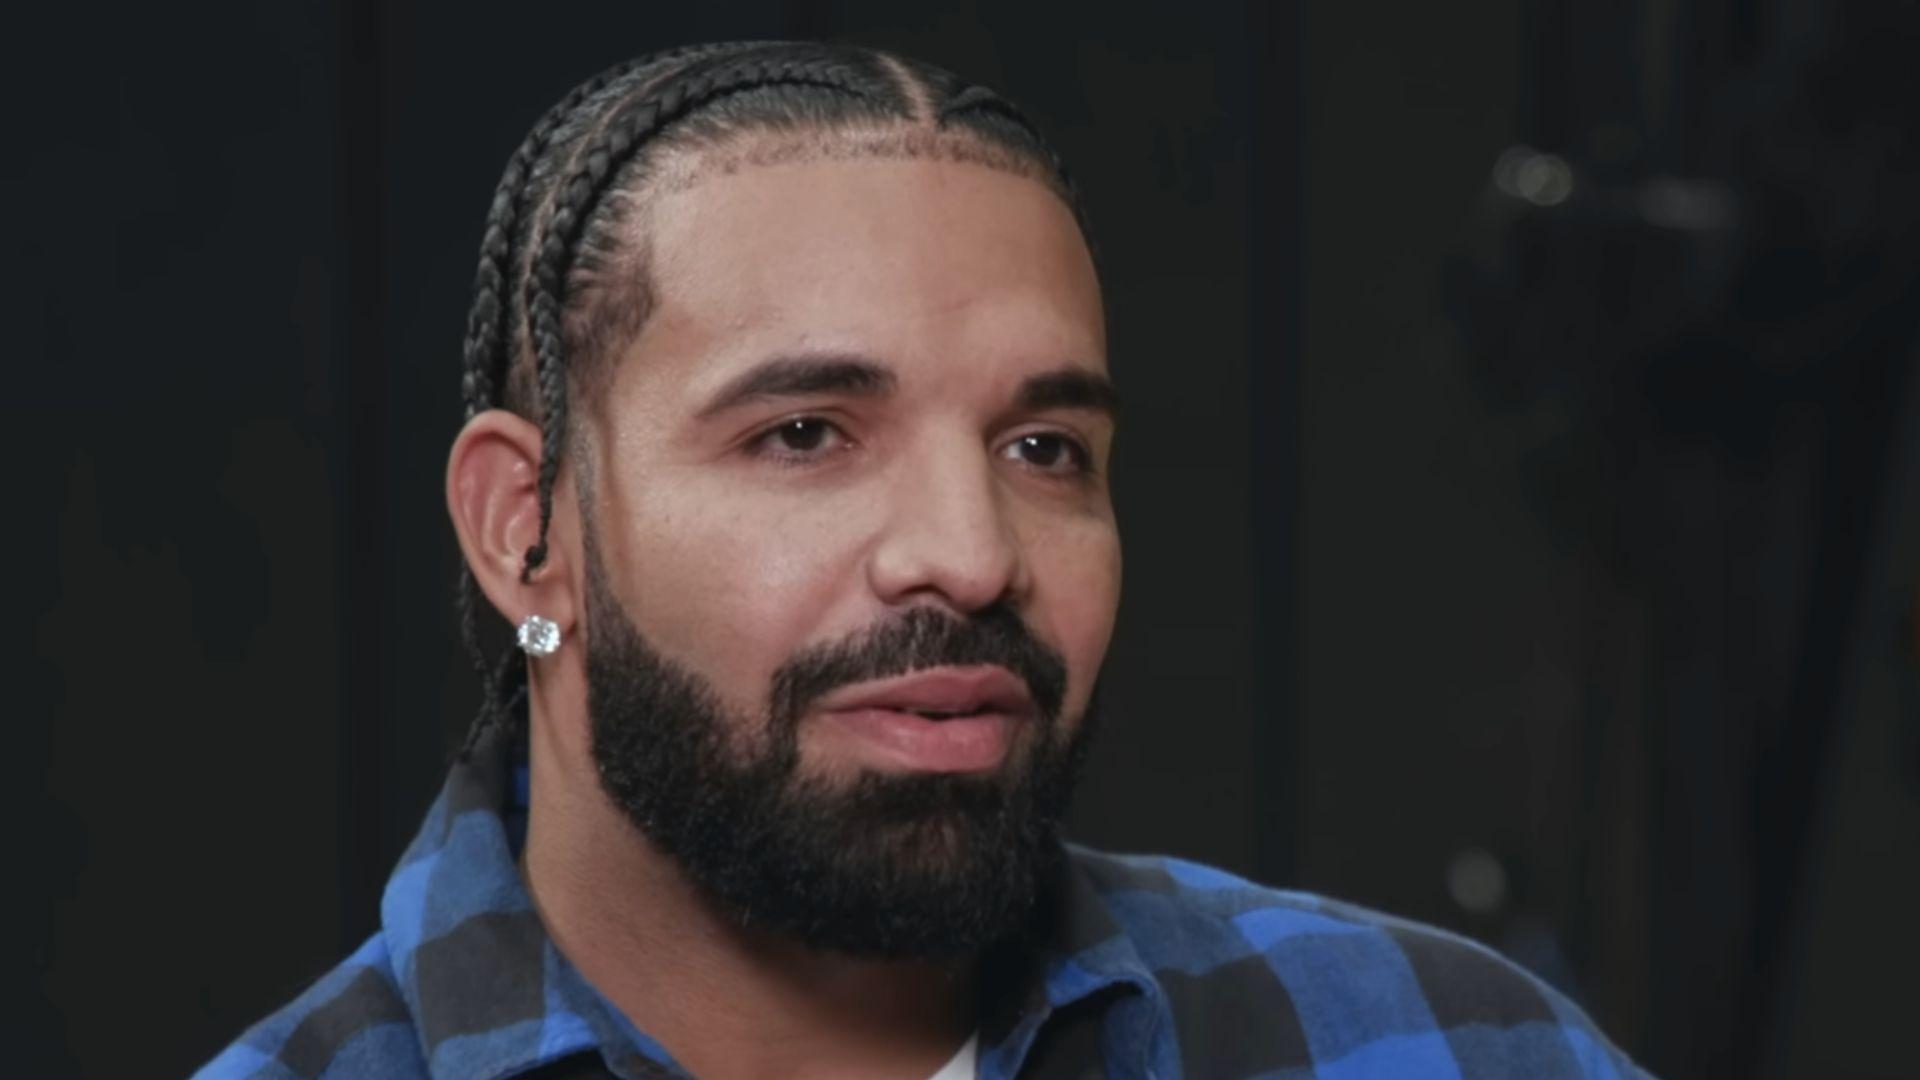 Drake in blue and black shirt talking to camera